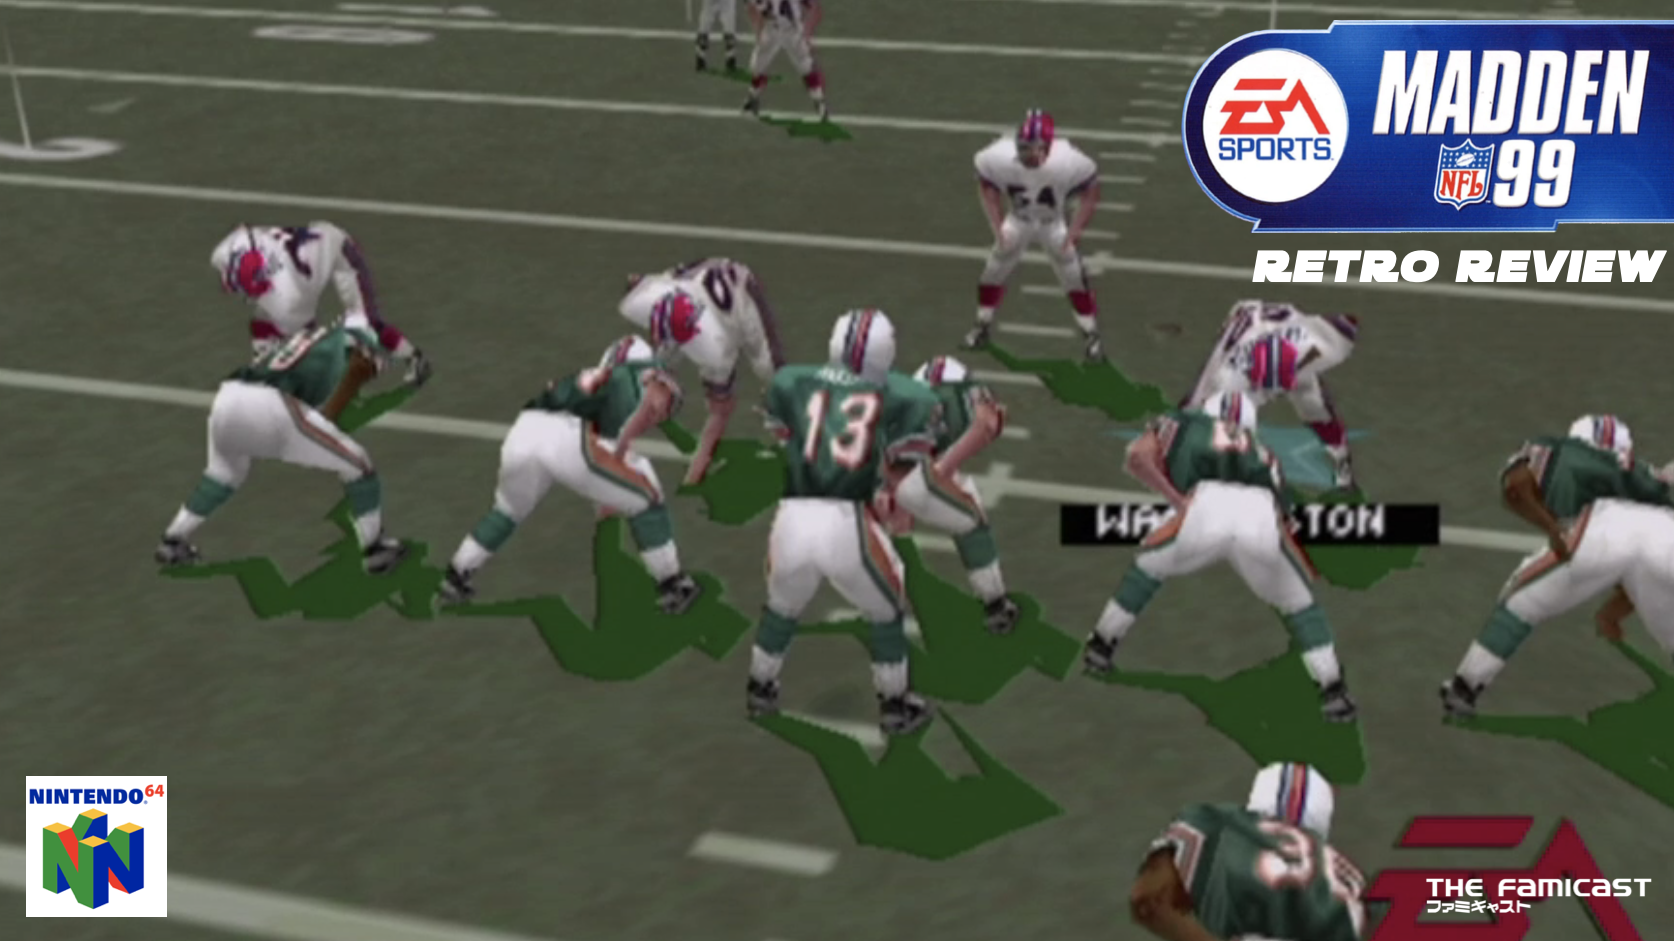 Madden NFL 99 | Retro Sports Review | Nintendo 64